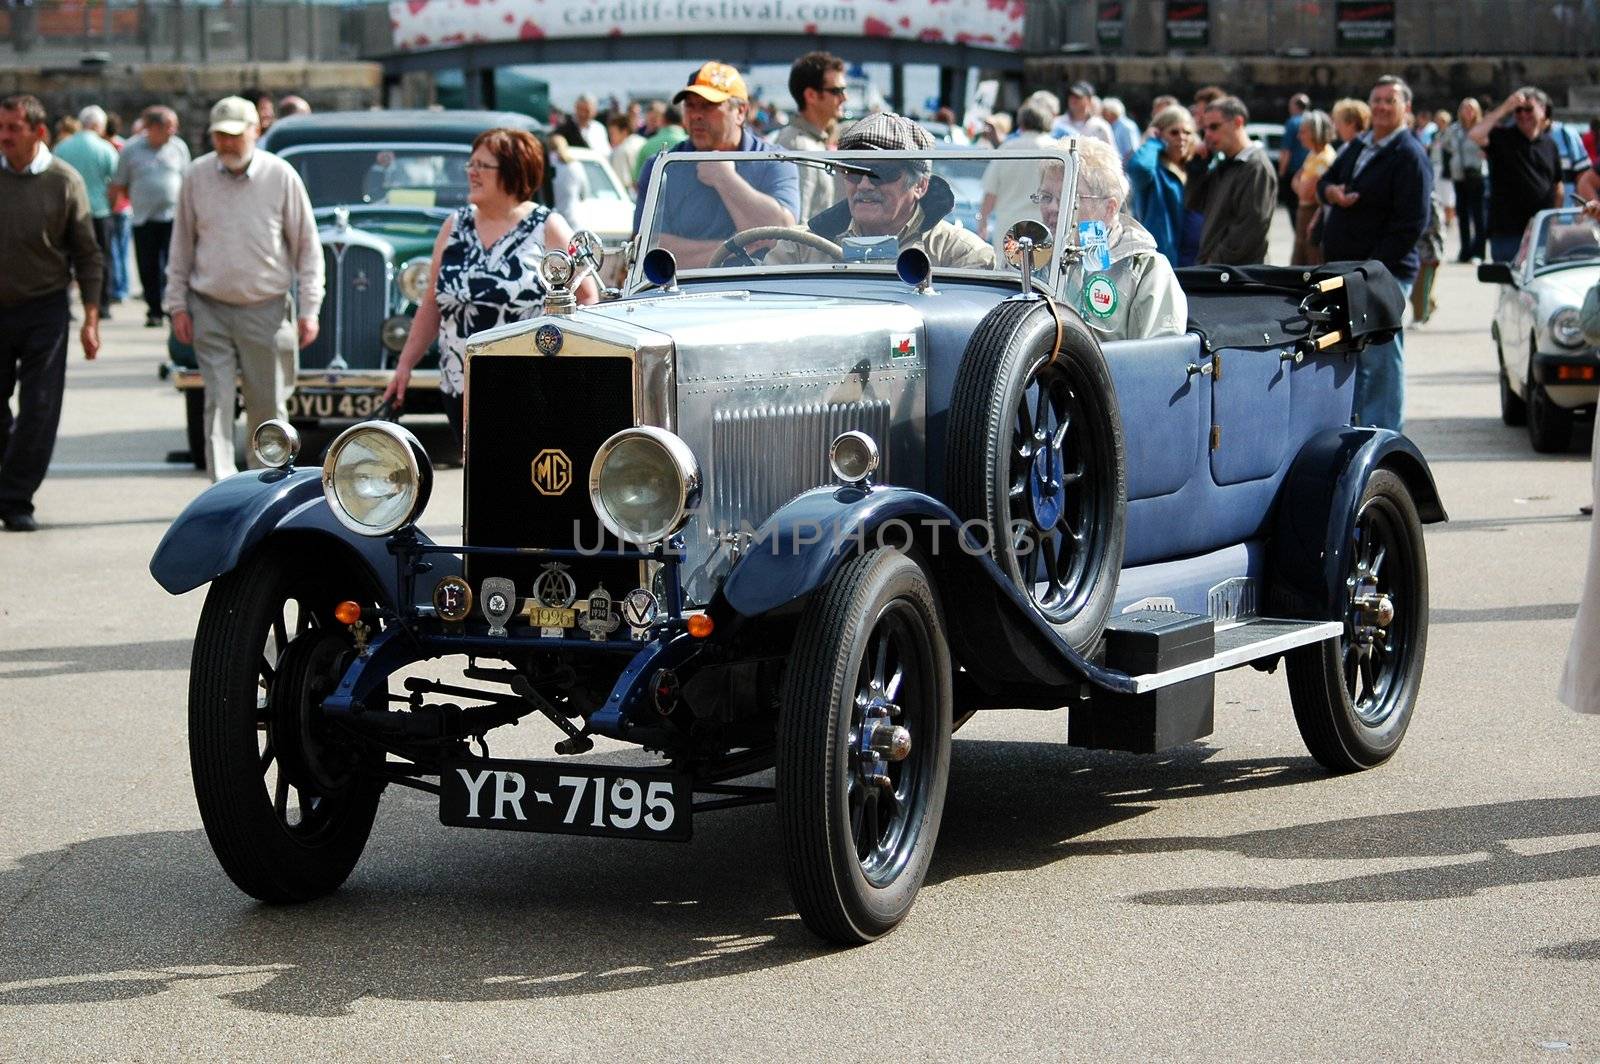 , historic car in Cardiff Bay, horizontally framed shot